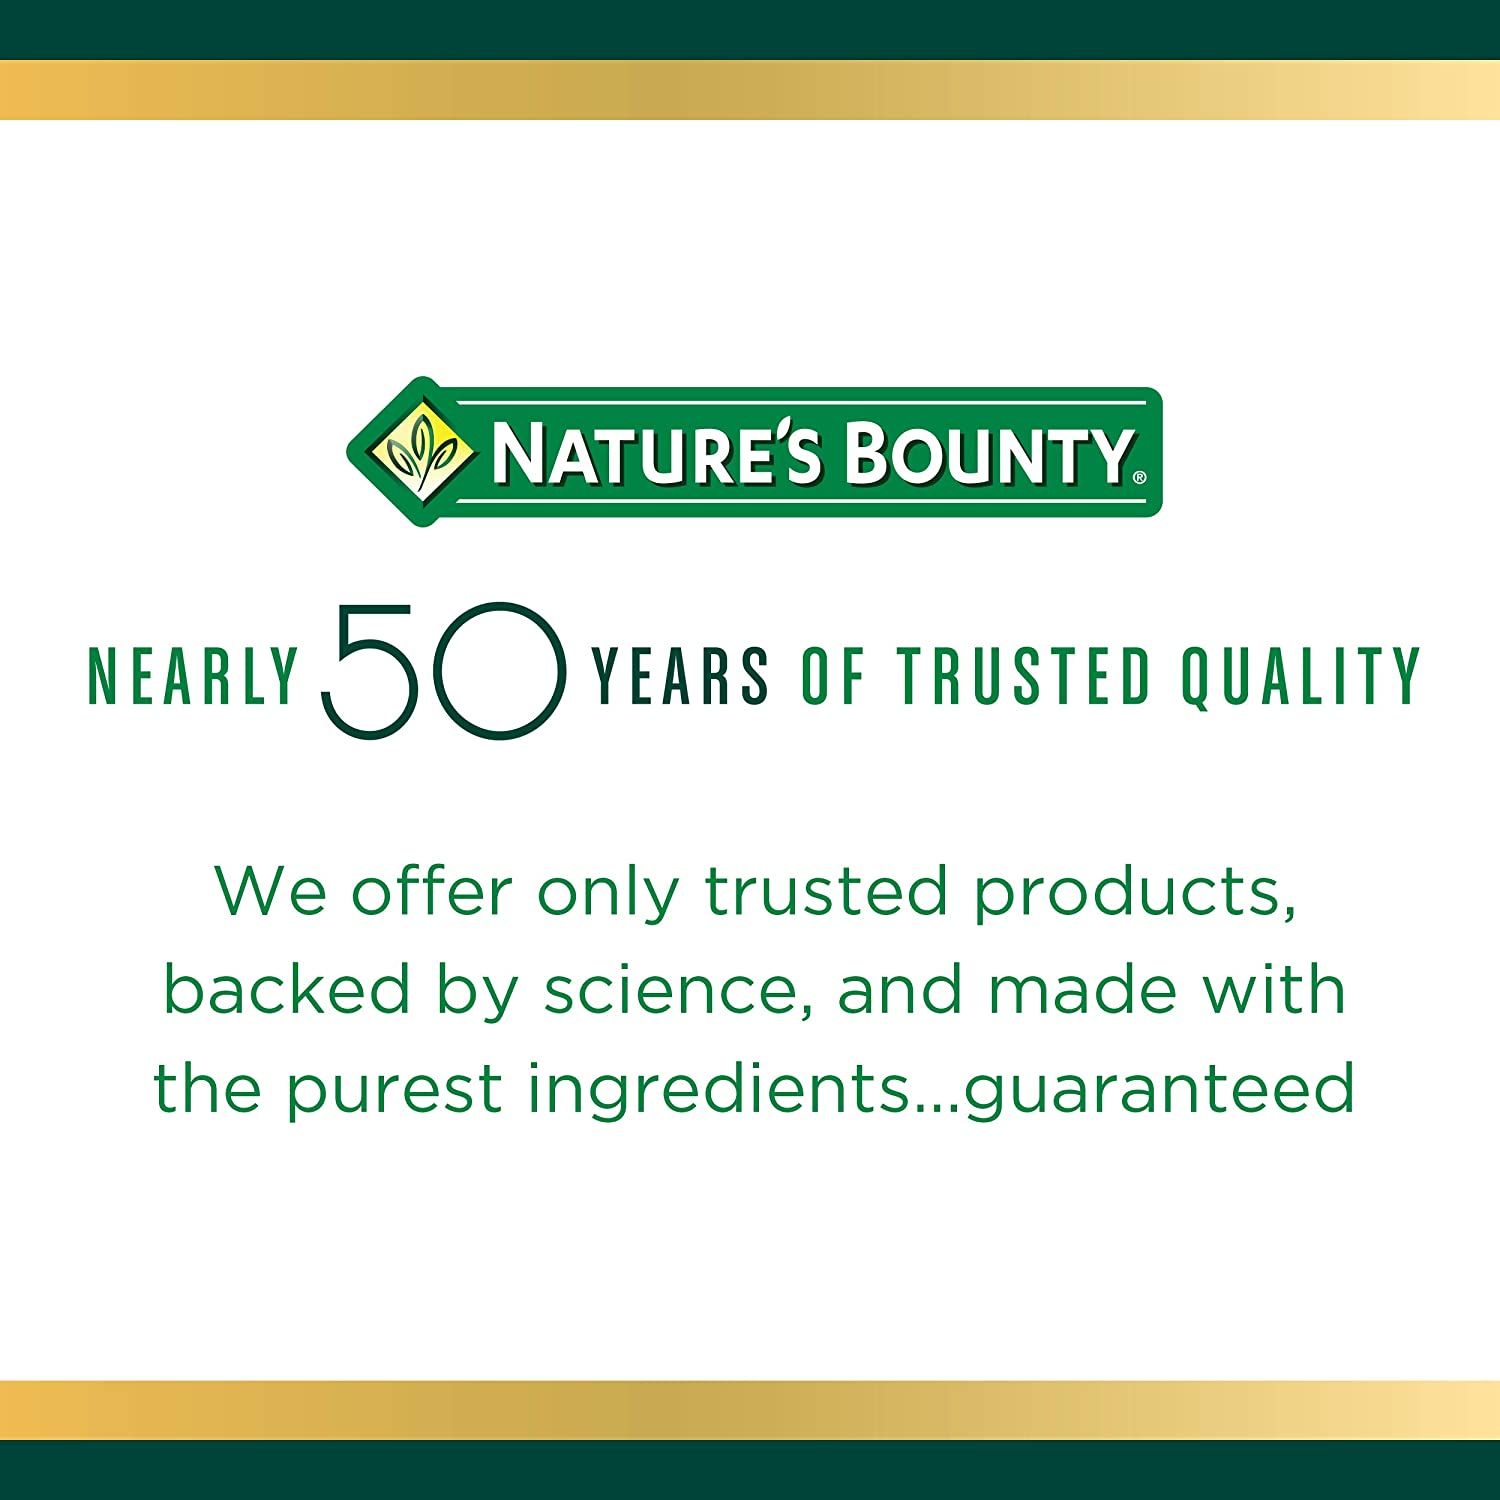 Nature's Bounty Vitamin C Gummies - 80 ct